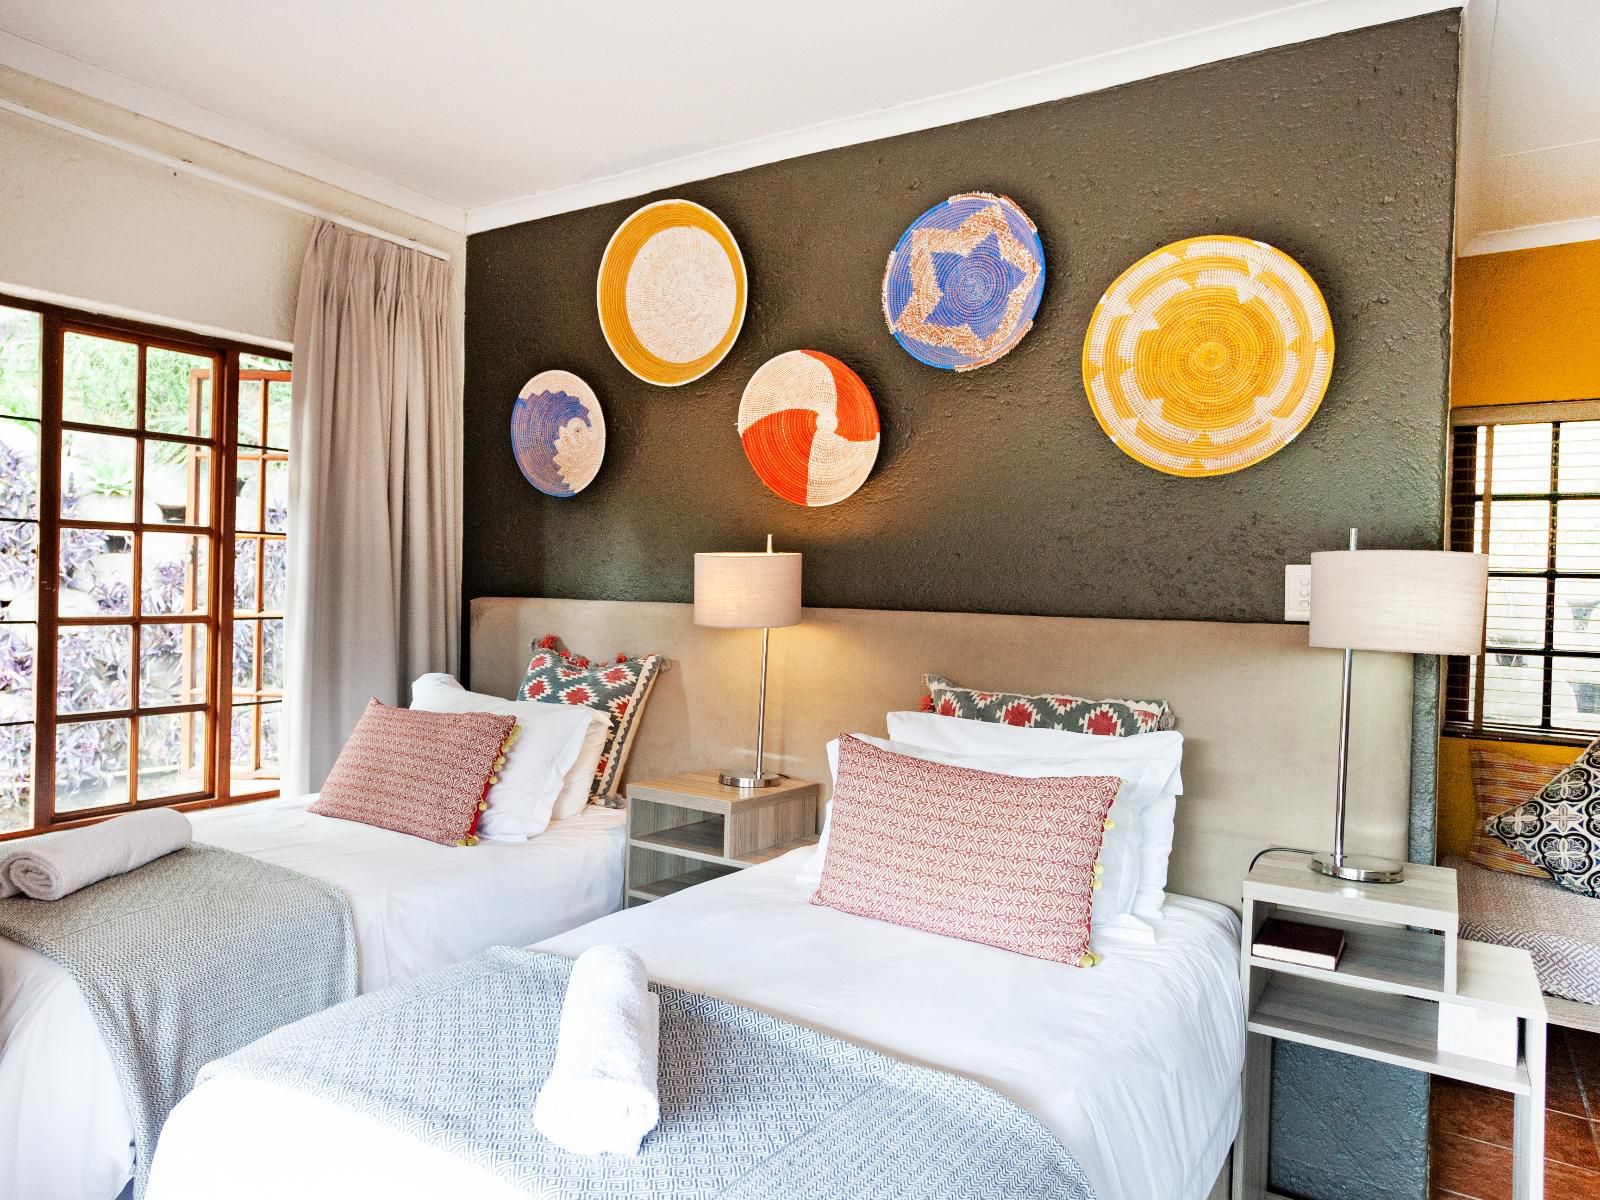 Chez Vincent Guest House Nelspruit Mpumalanga South Africa Bedroom